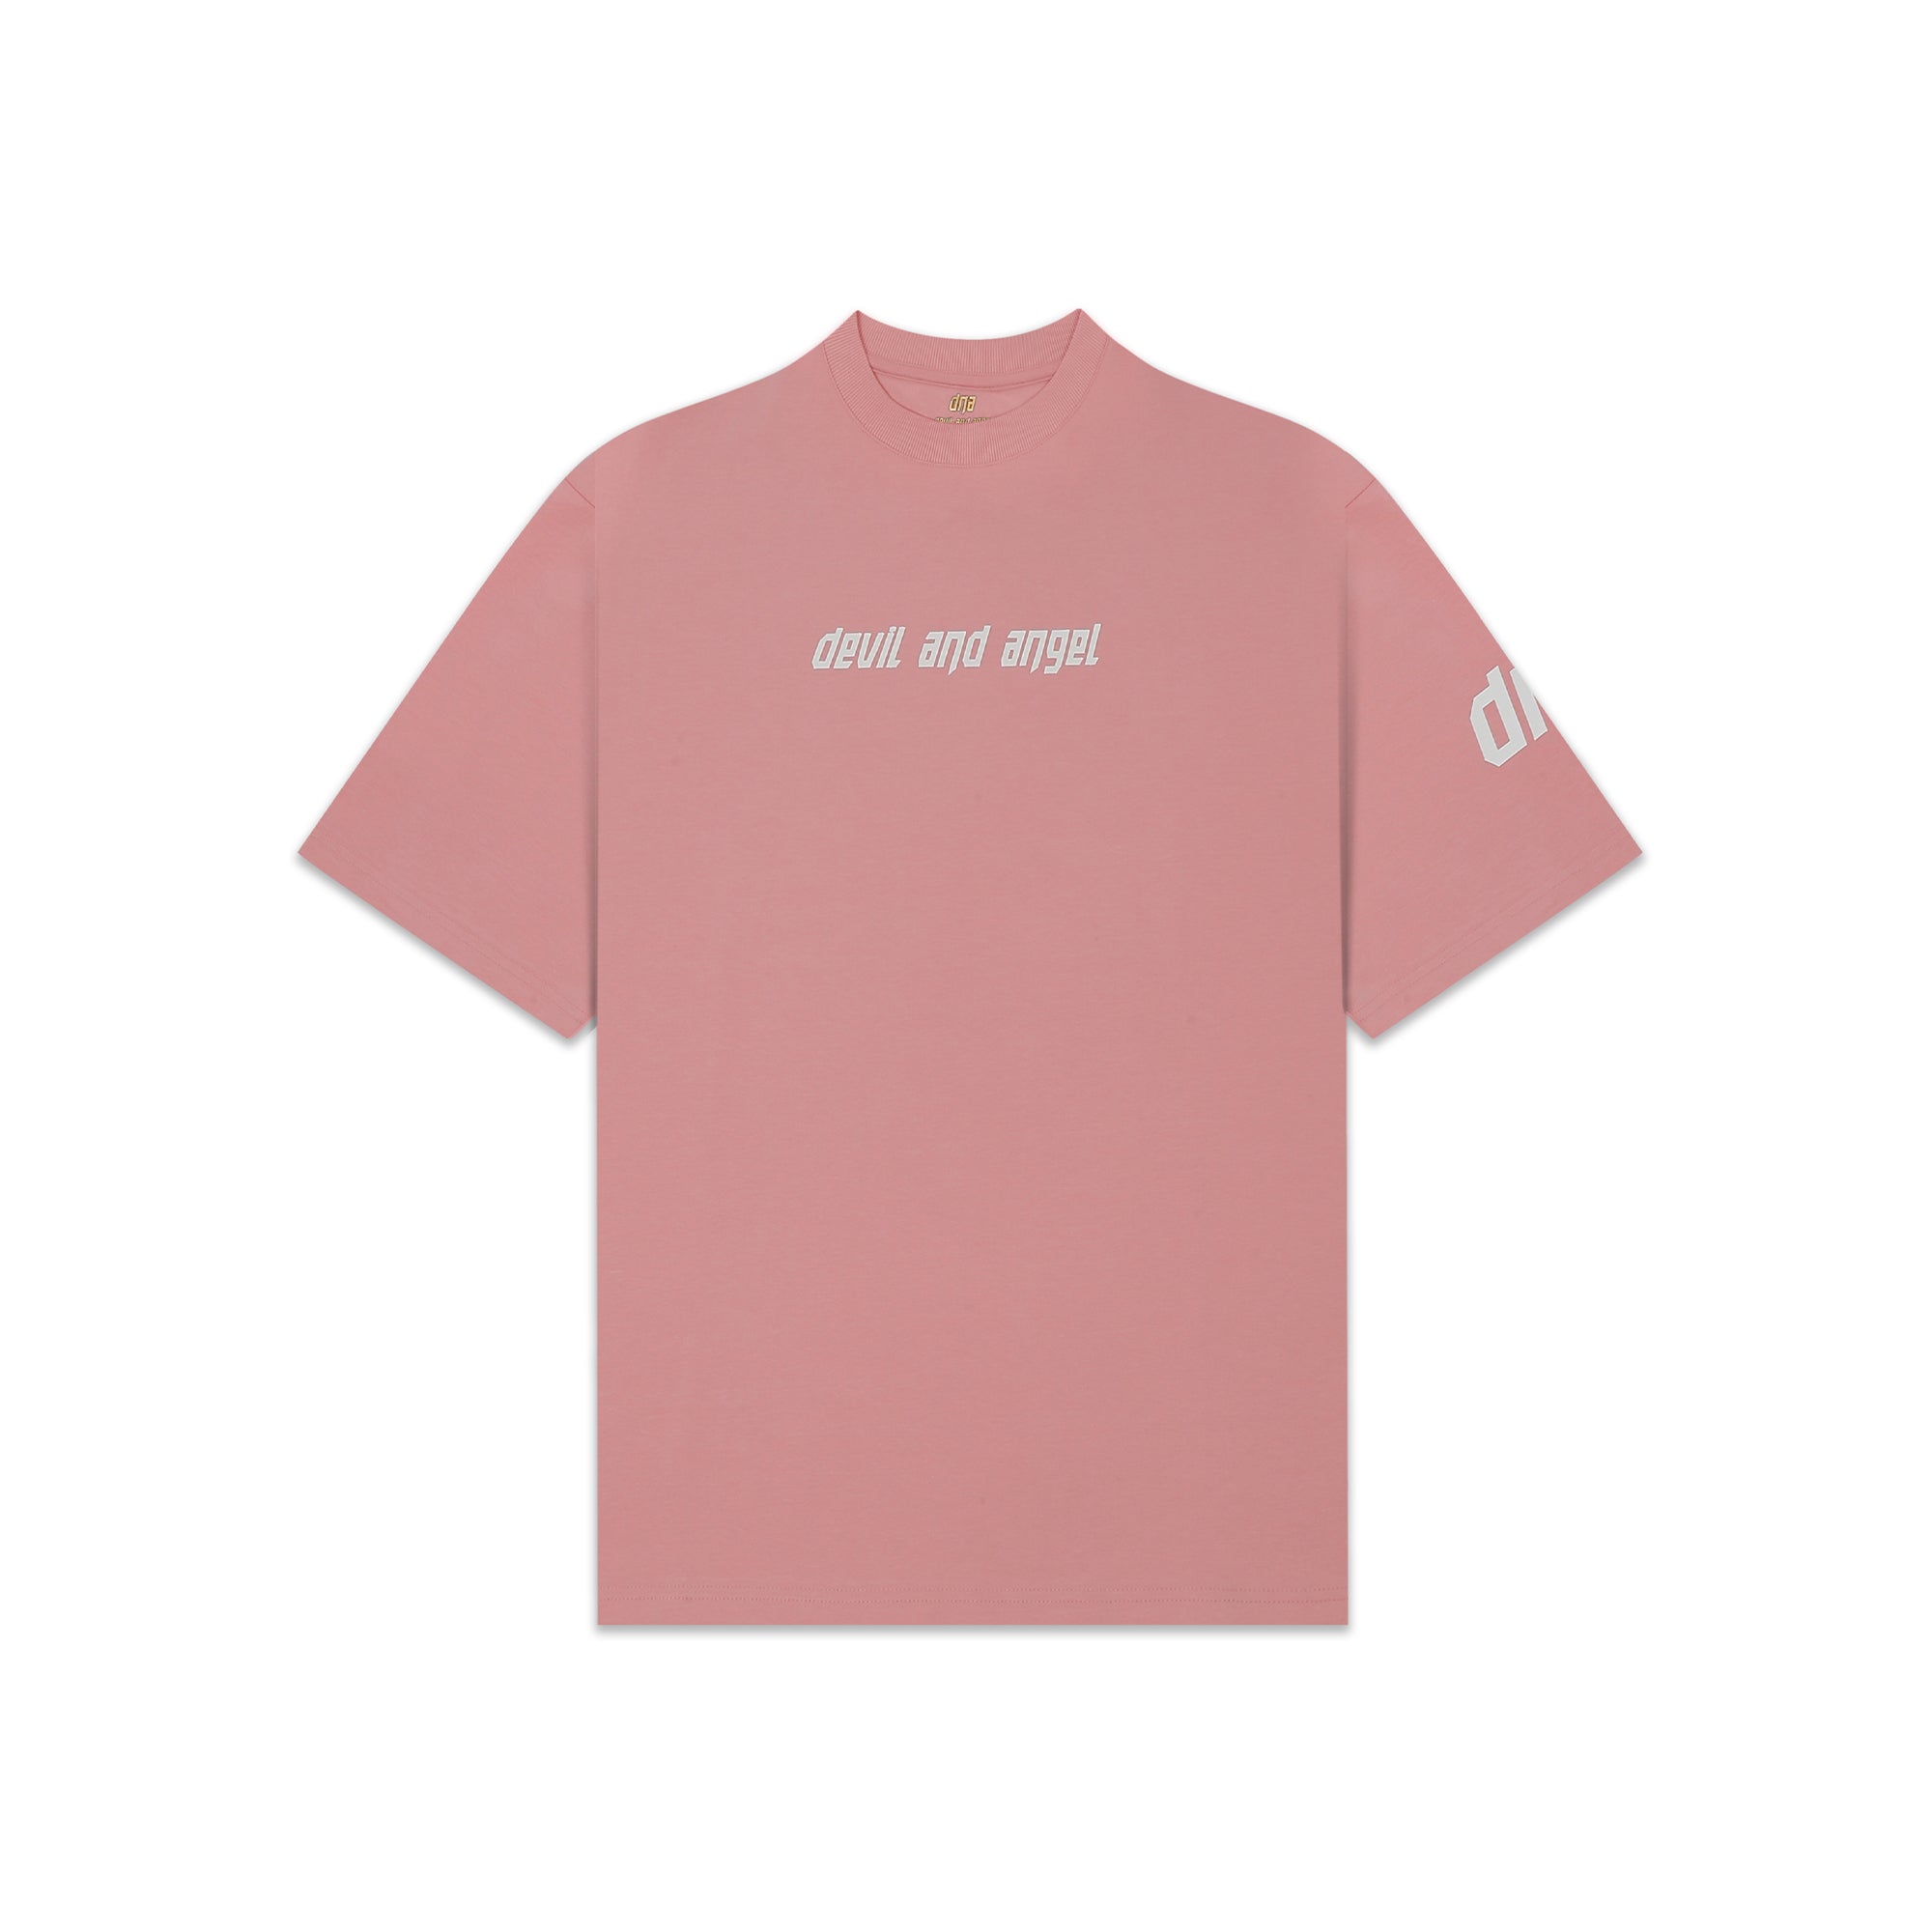 Basic DNA T-Shirt - Pink